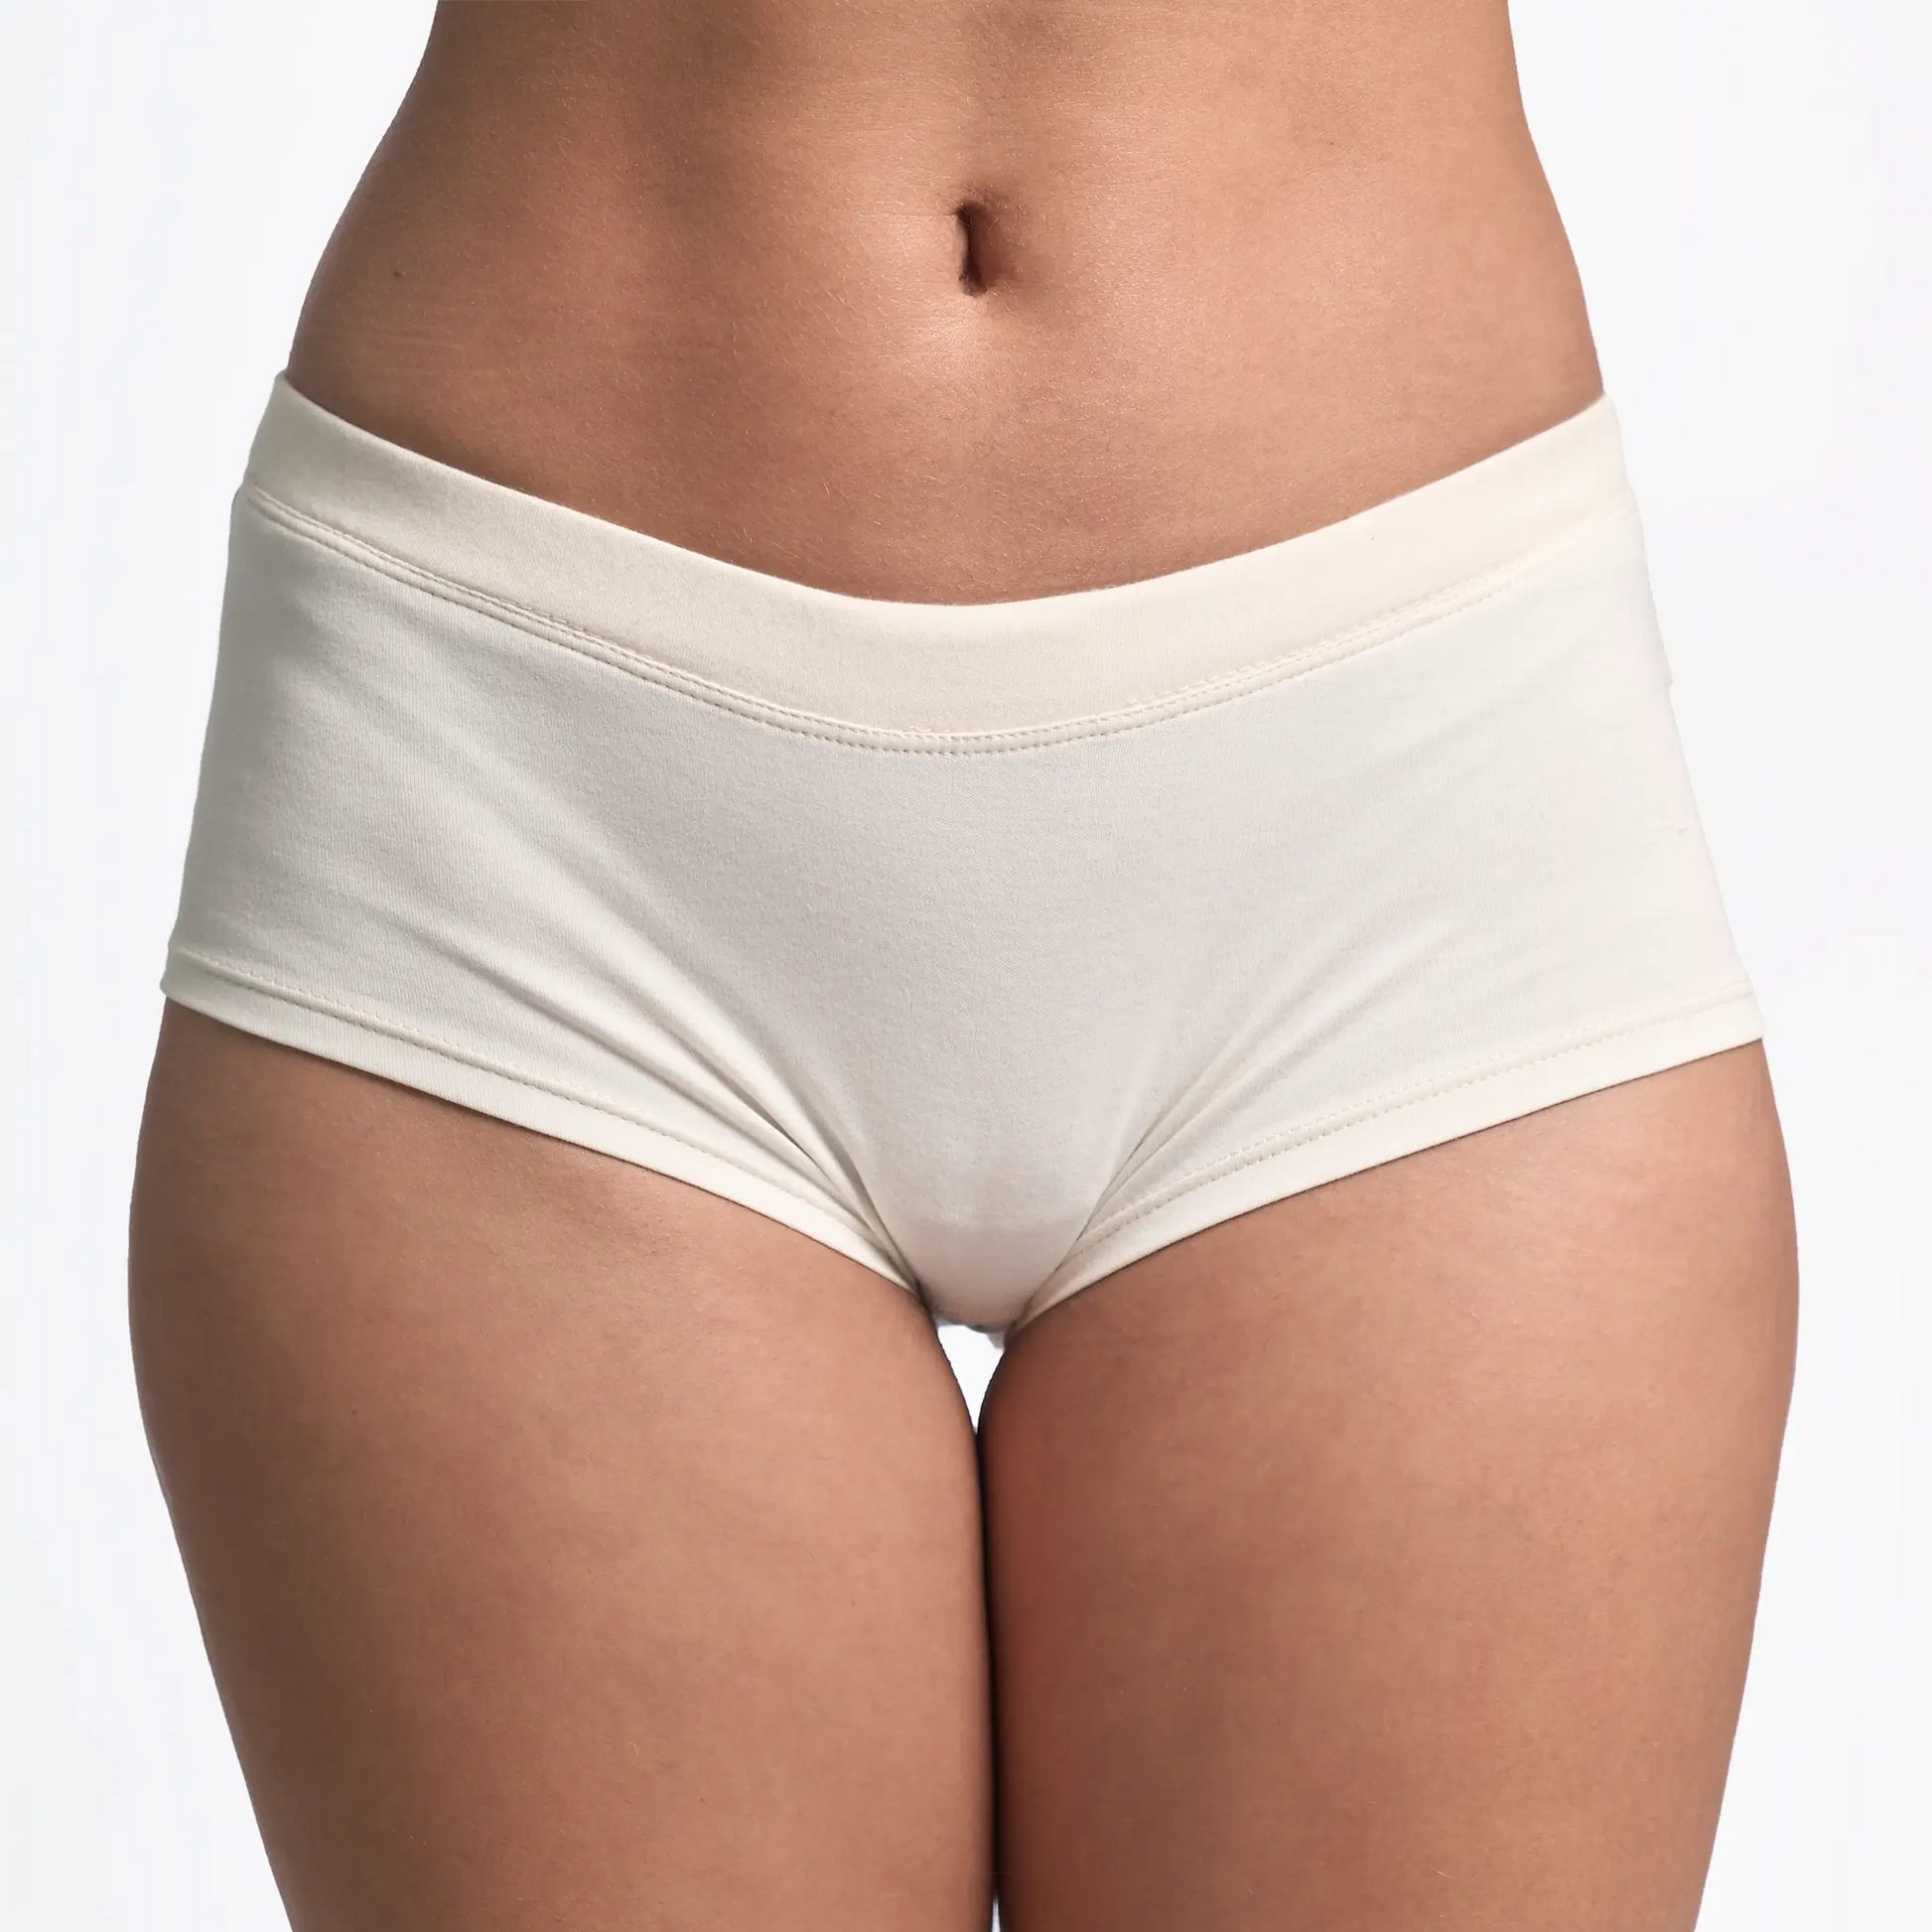 Womens White Cotton Panties - Underwear, Clothing